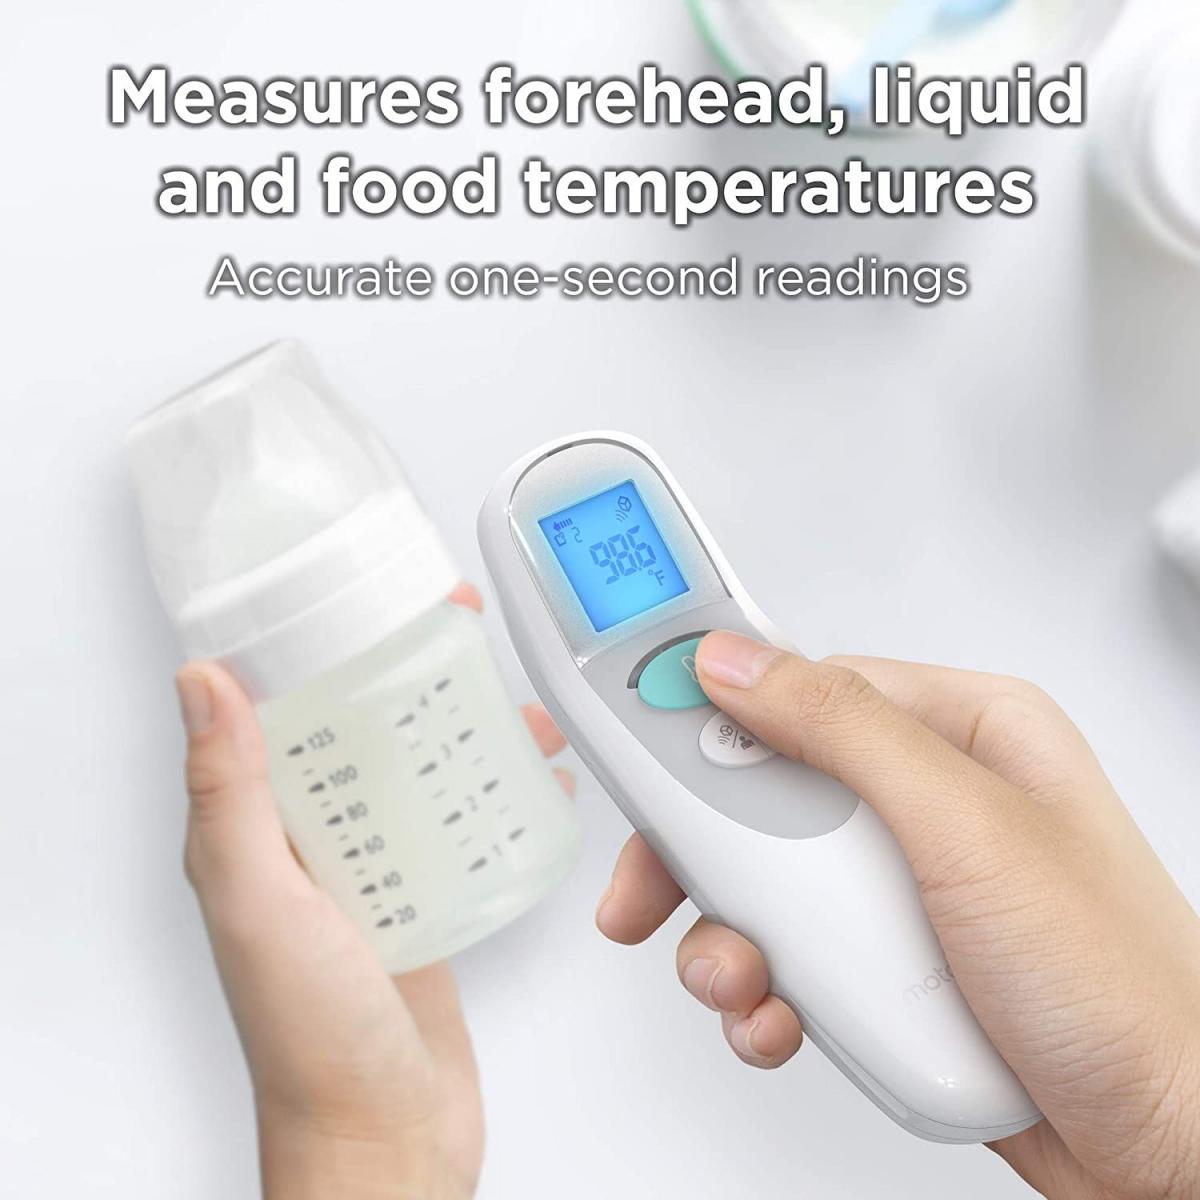 Motorola - Motorola MBP75SN non-contact forehead thermometer | 3-in-1 smart forehead thermometer | forehead probe | thermometer | heat detector | infrared